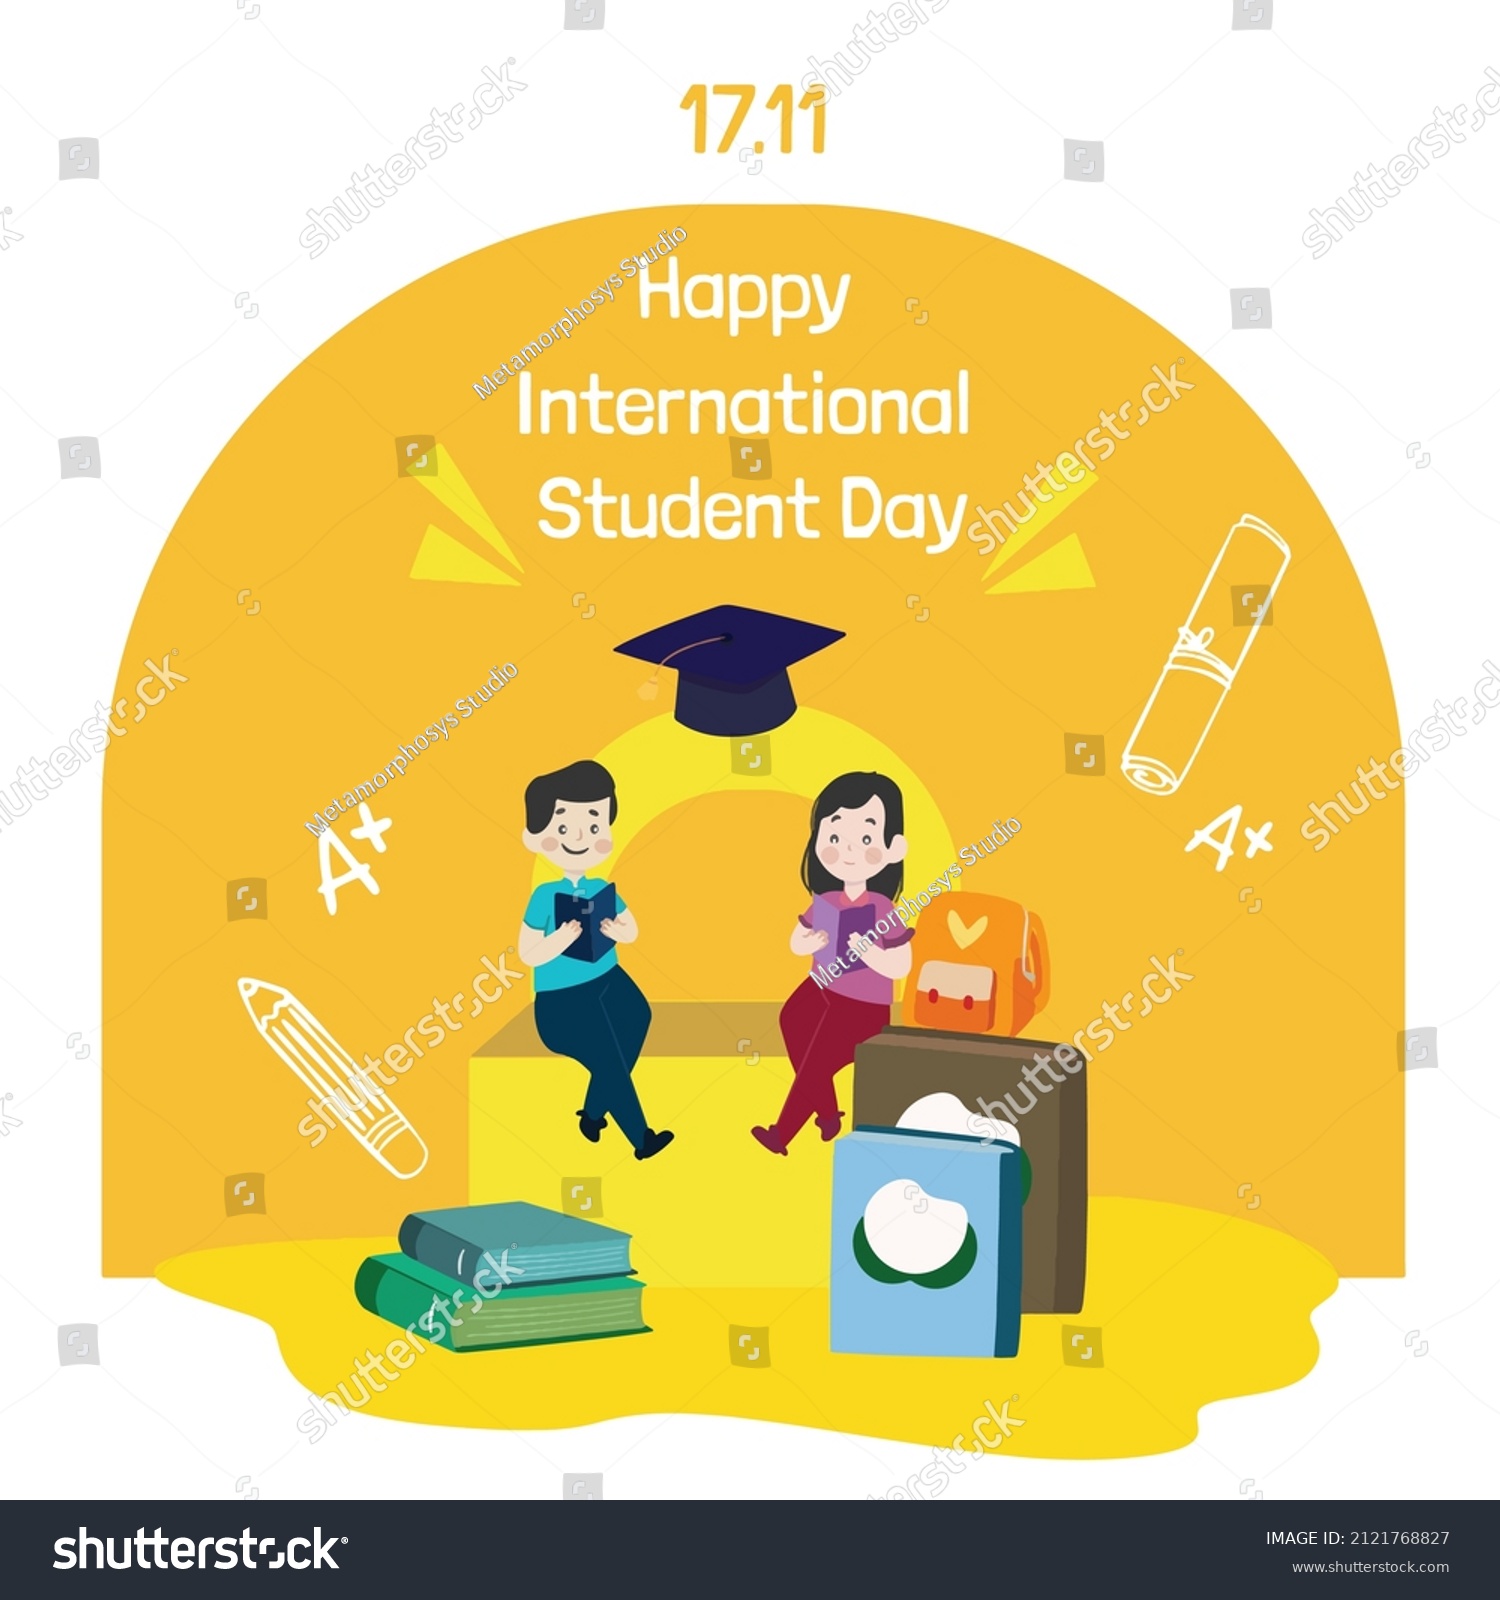 Happy International Student Day Vector Illustration Stock Vector ...